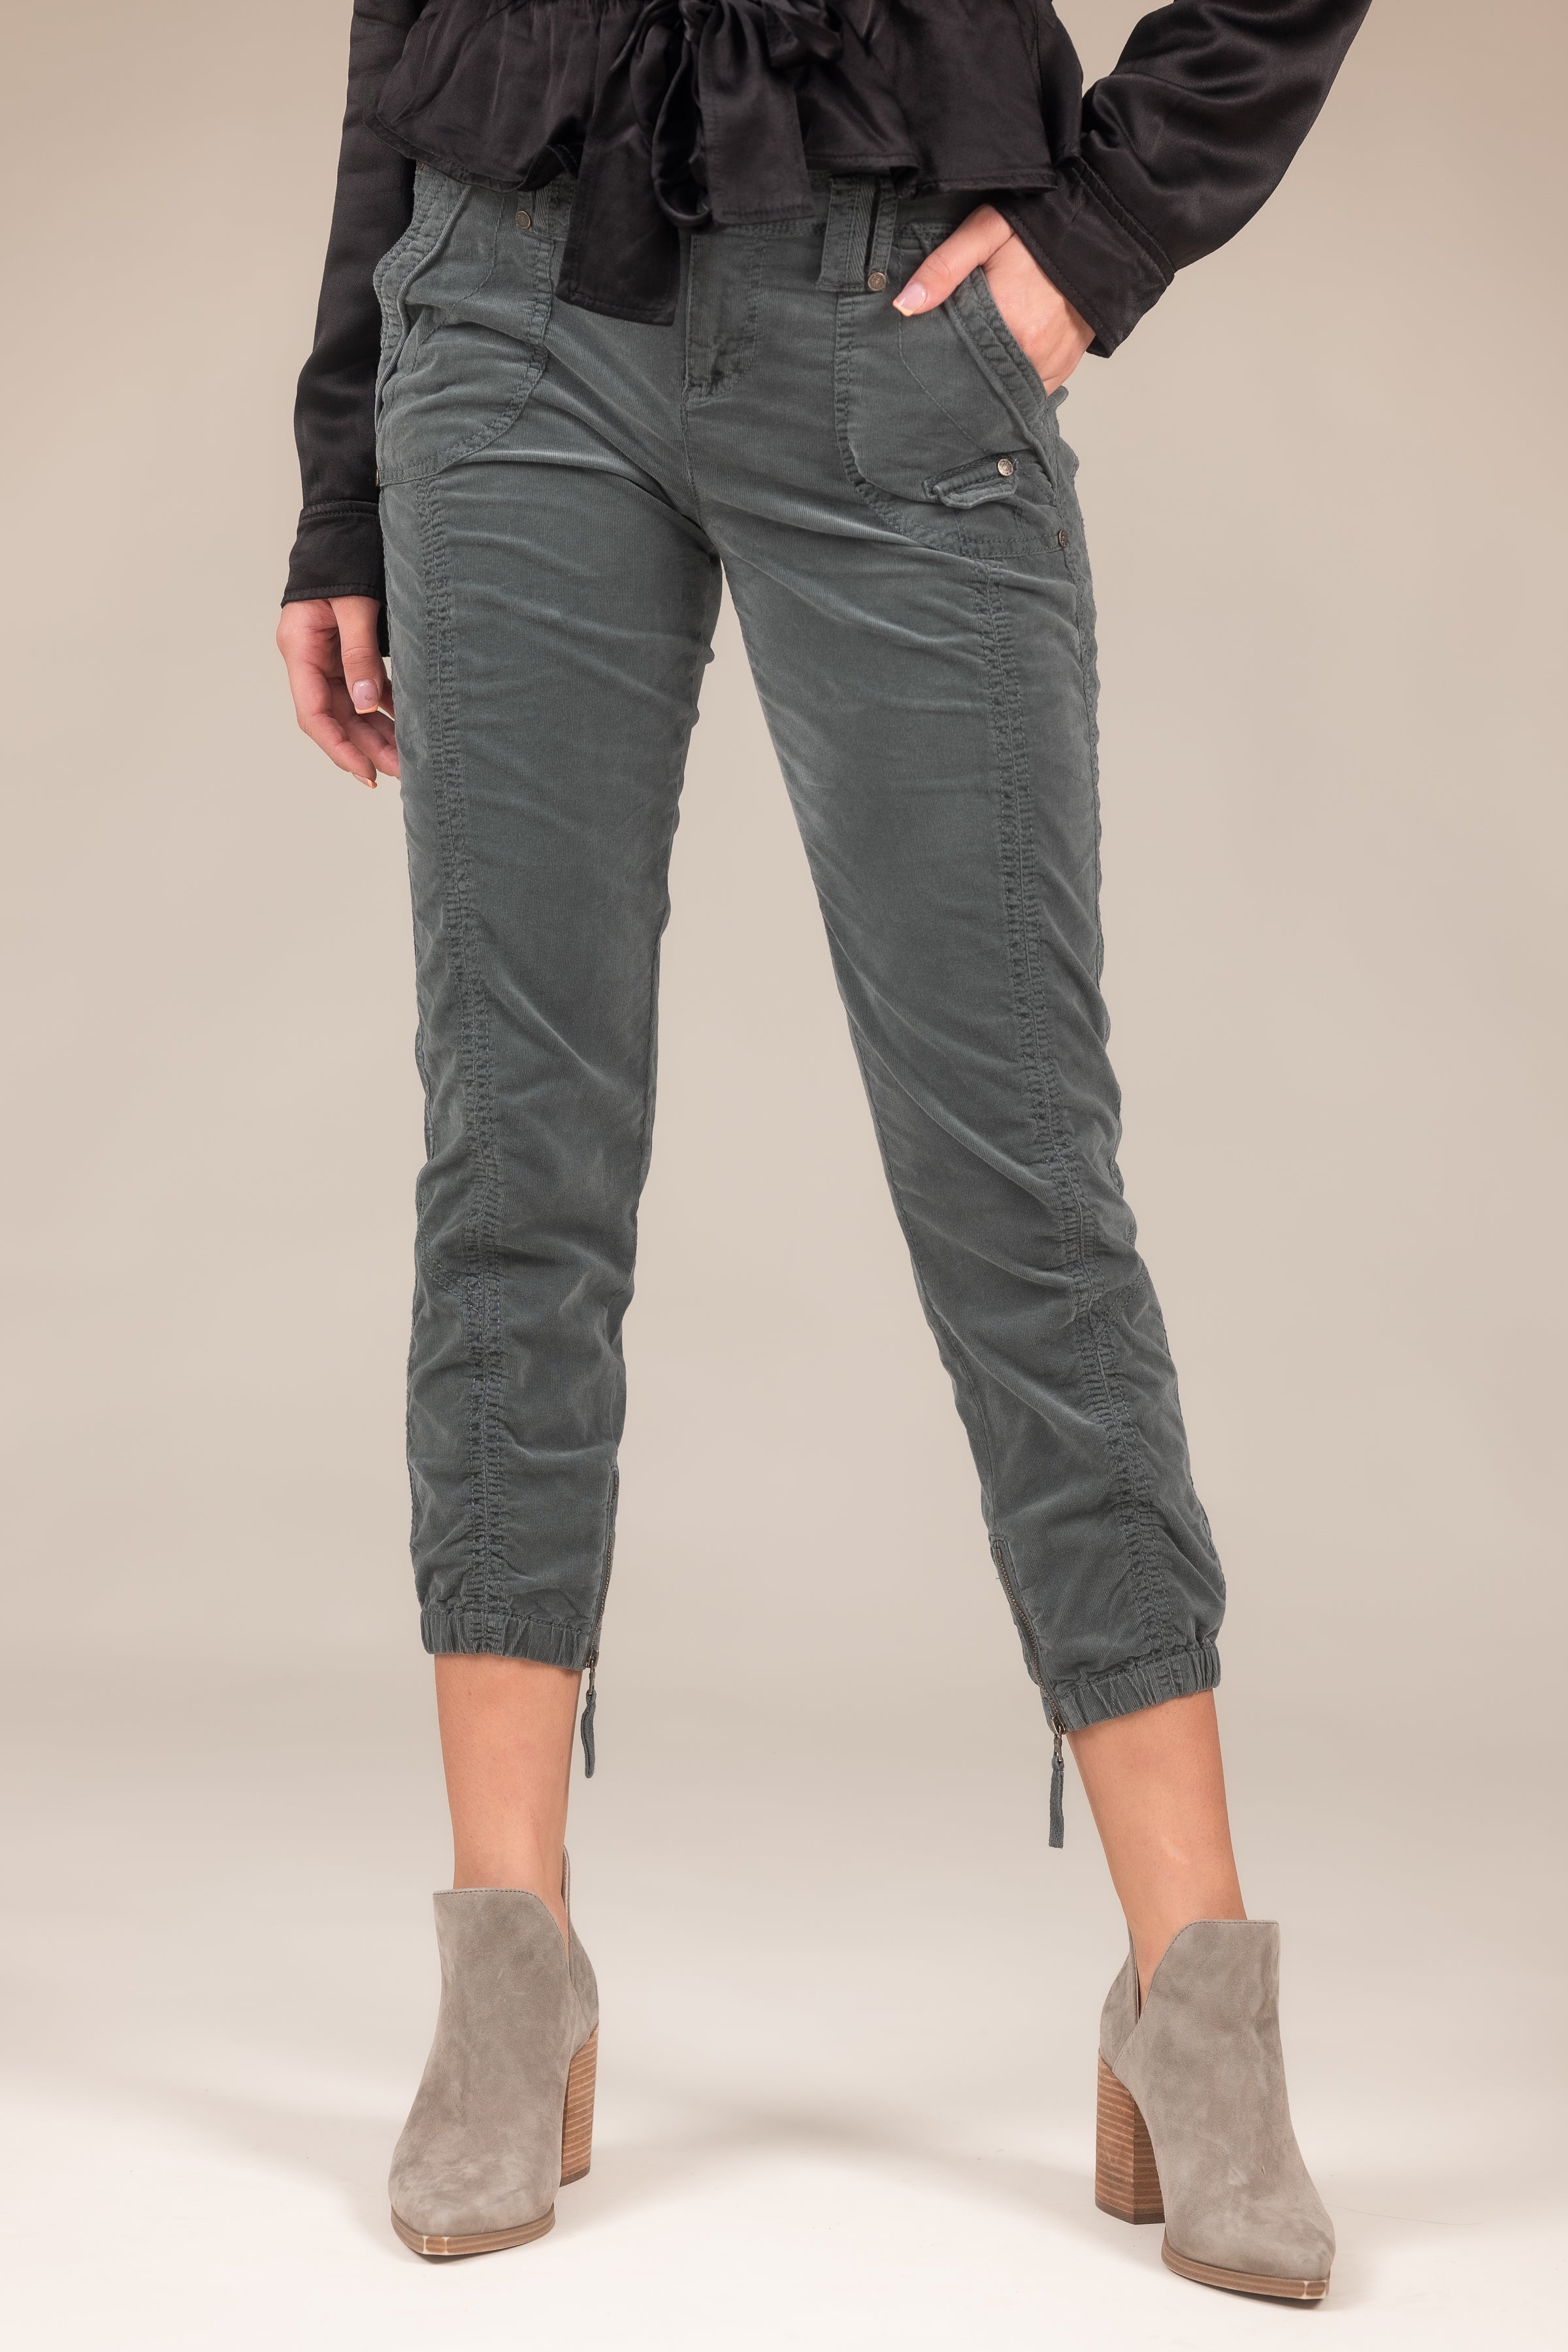 Women's Stretch Corduroy Pants – Roadrunner Jeans Apparel